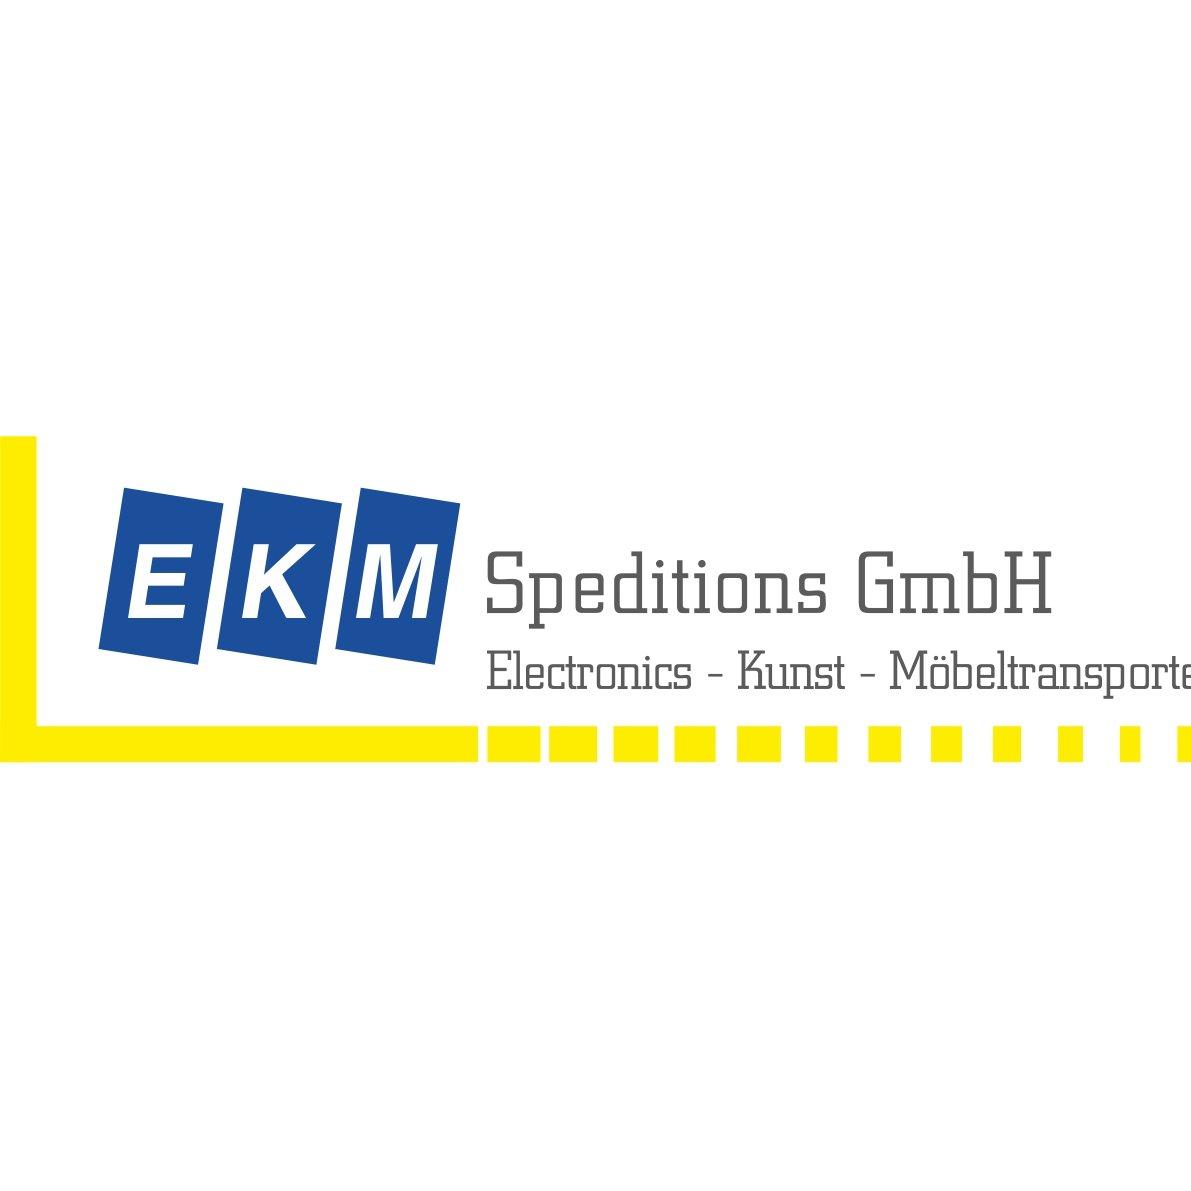 EKM Speditions GmbH Electronics Kunst Möbeltransporte Logo